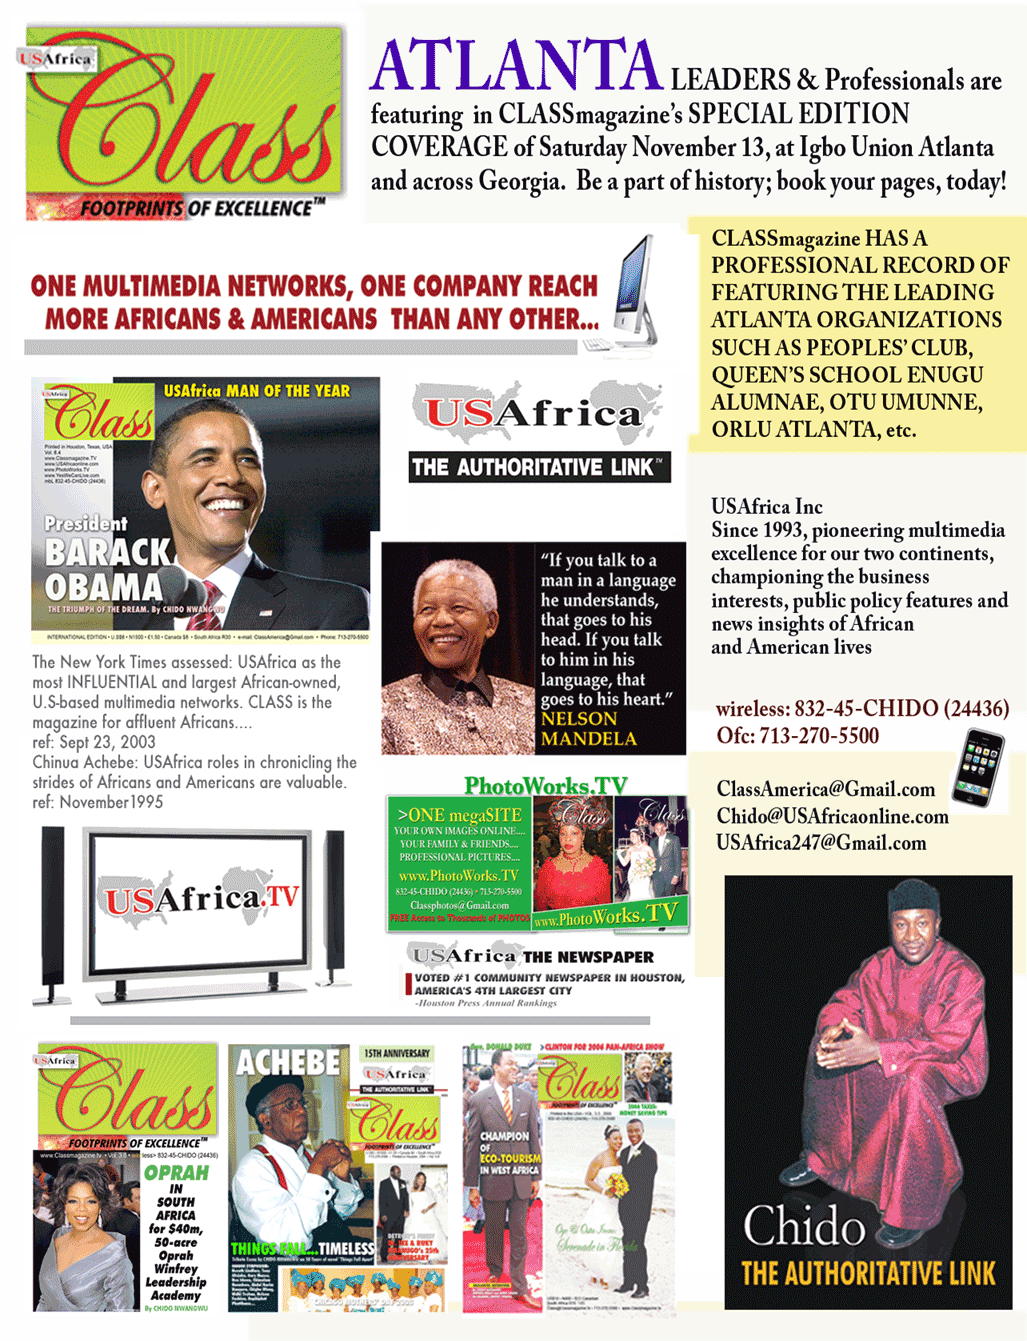 ATLANTA special edition of CLASSmagazine, Sat Nov 13 at Igbo Union Day, etc